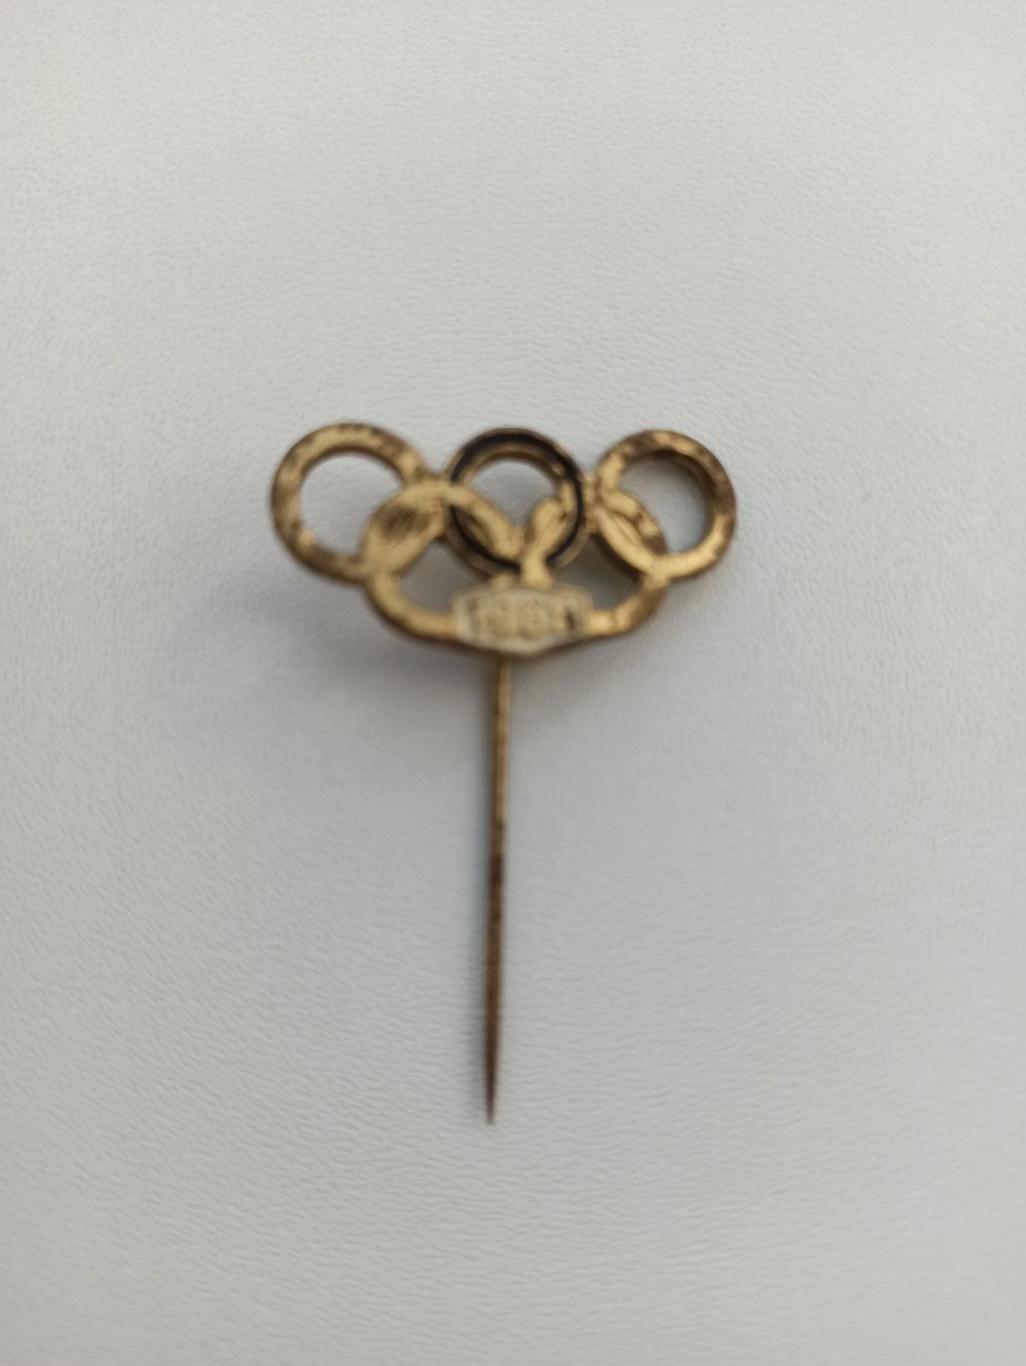 Олимпиада, 1968, олимпийские кольца, тяжелый металл